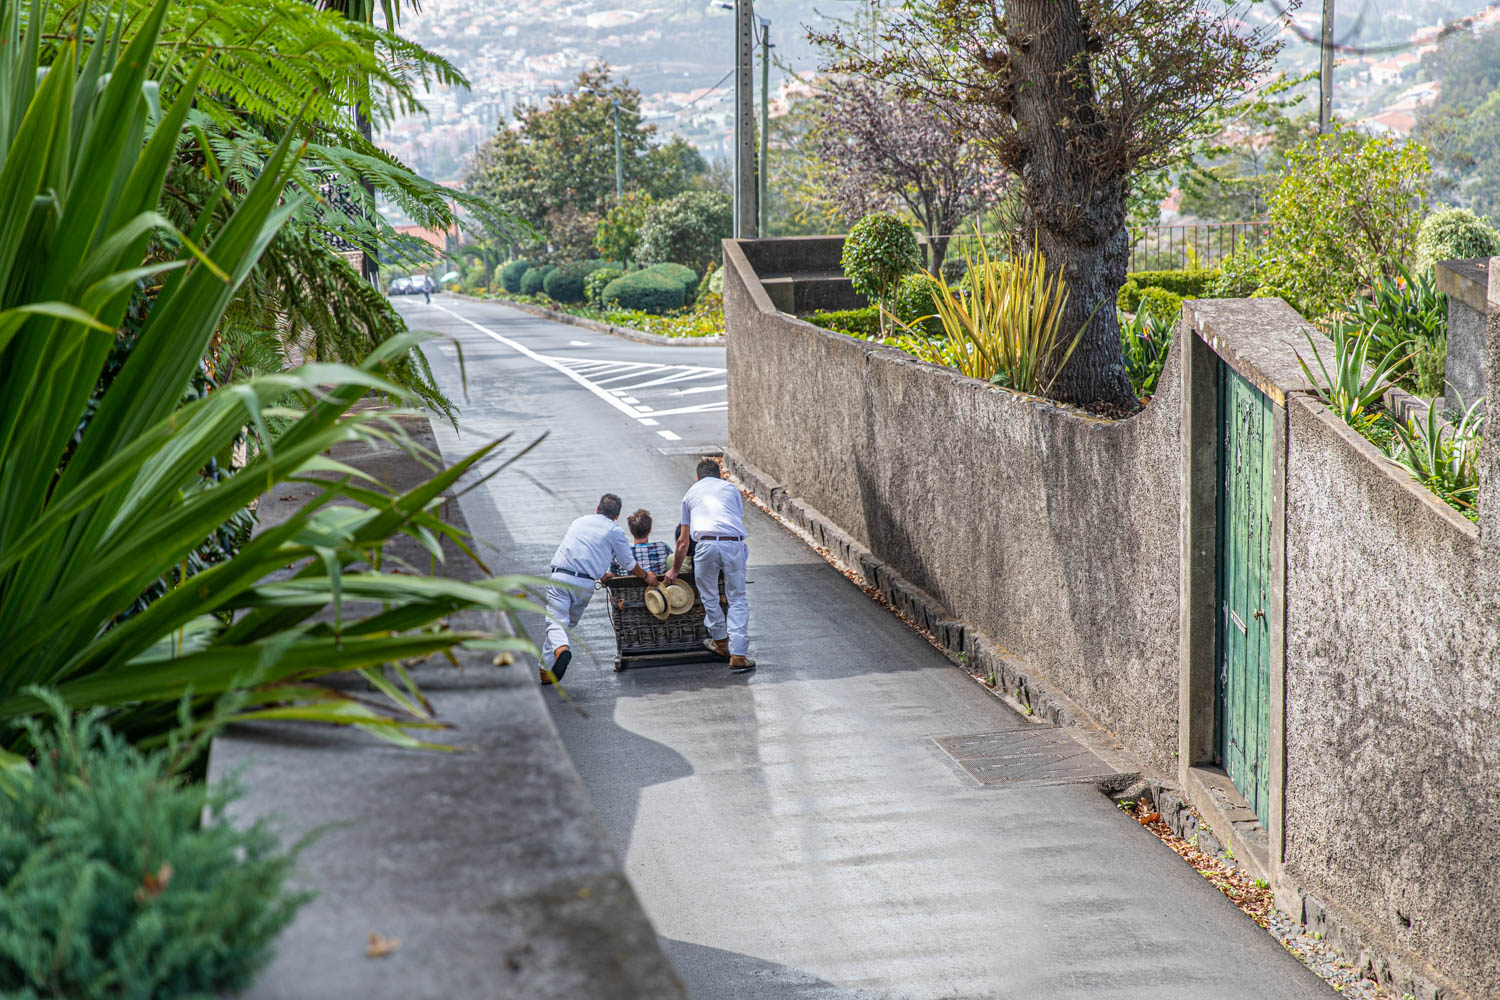 Sleigh ride in Funchal Madeira - A toboggan ride to remeber